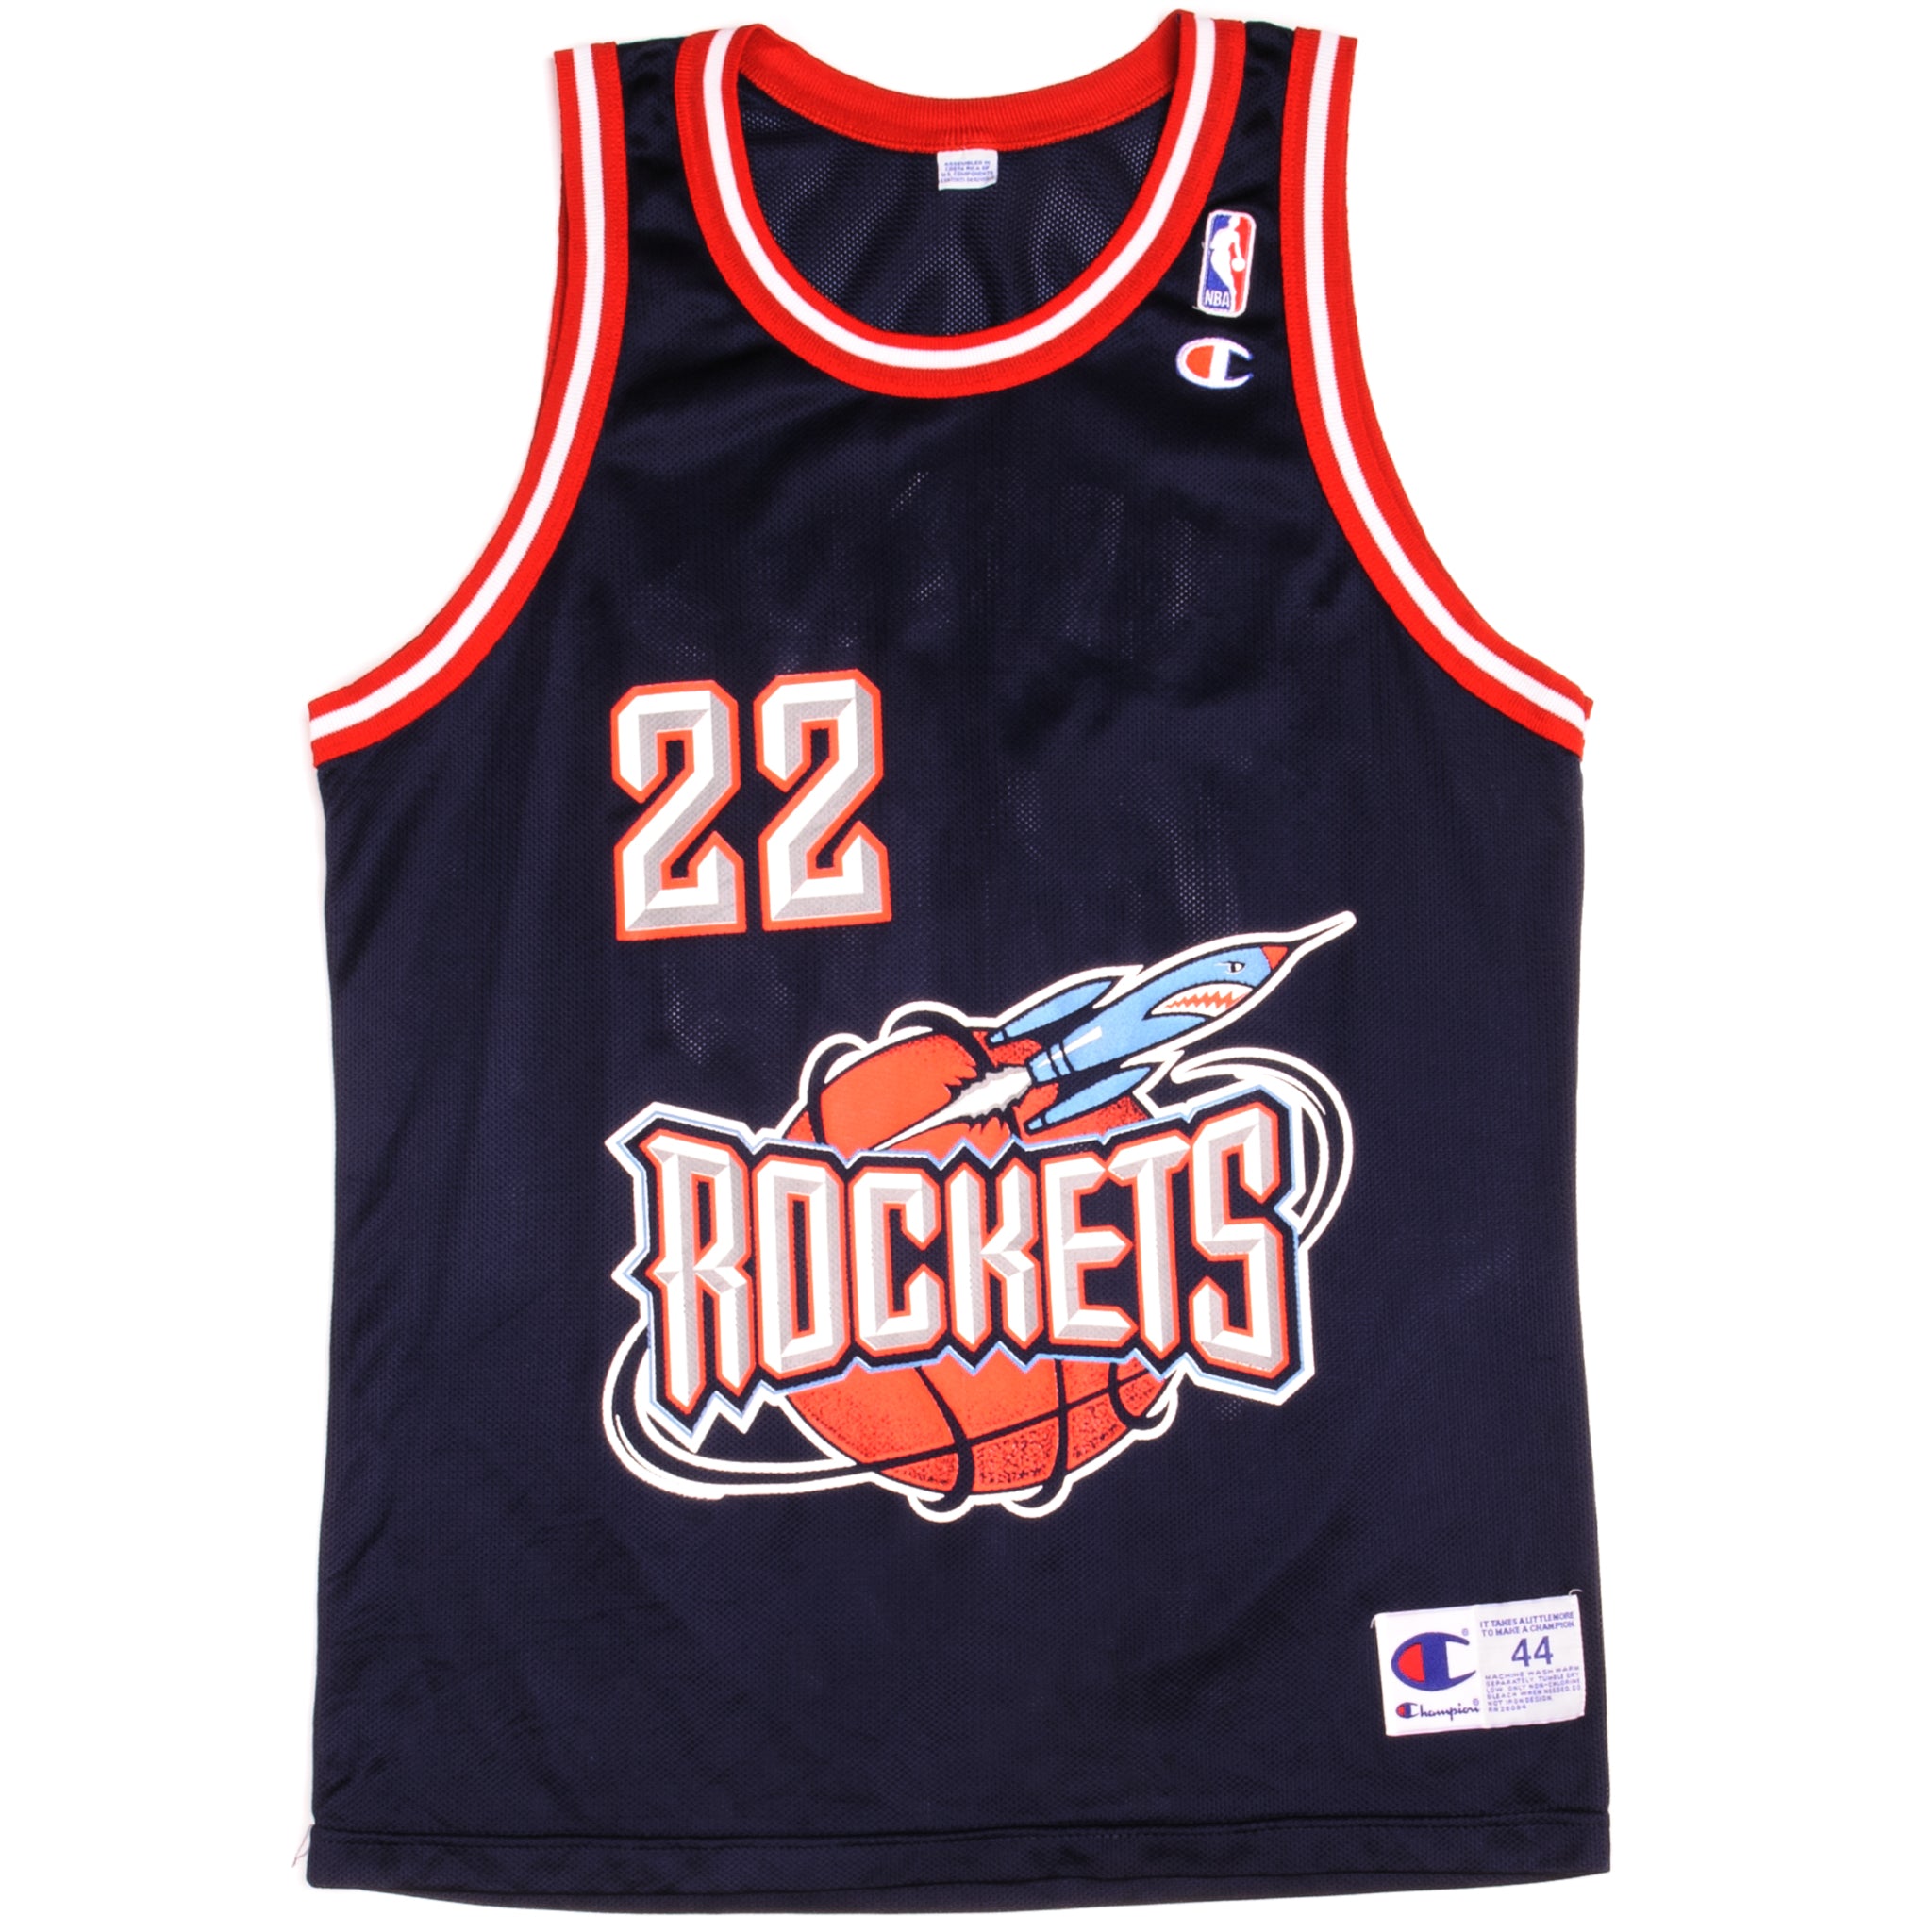 Houston Rockets Jerseys, Rockets Jersey, Houston Rockets Uniforms